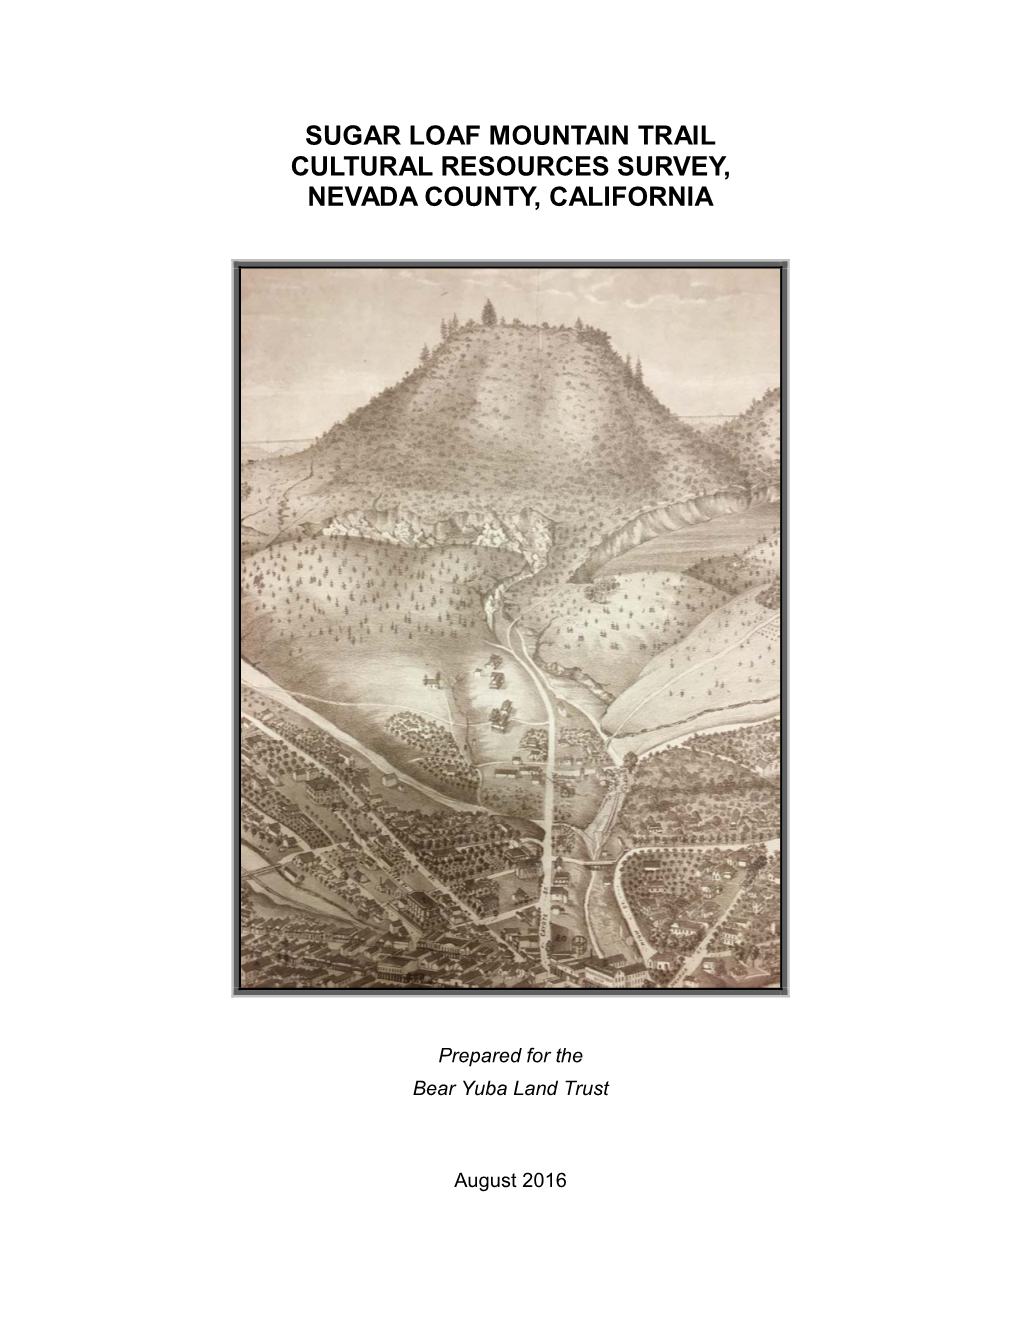 Sugar Loaf Mountain Trail Cultural Resources Survey, Nevada County, California